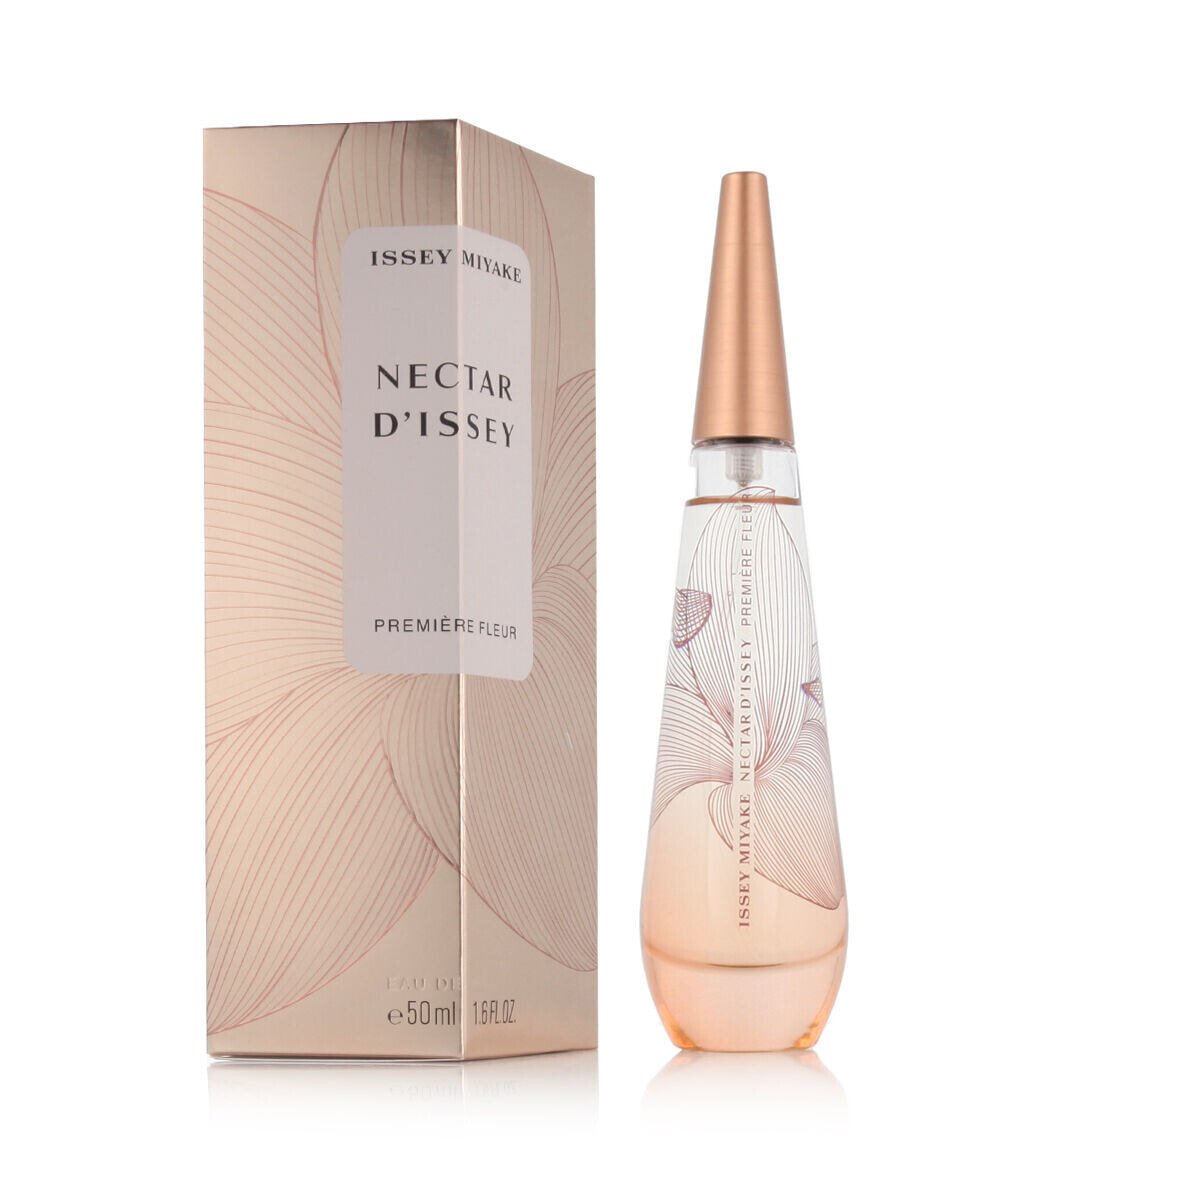 Женская парфюмерия Issey Miyake EDP Nectar D’Issey Premiere Fleur 50 ml